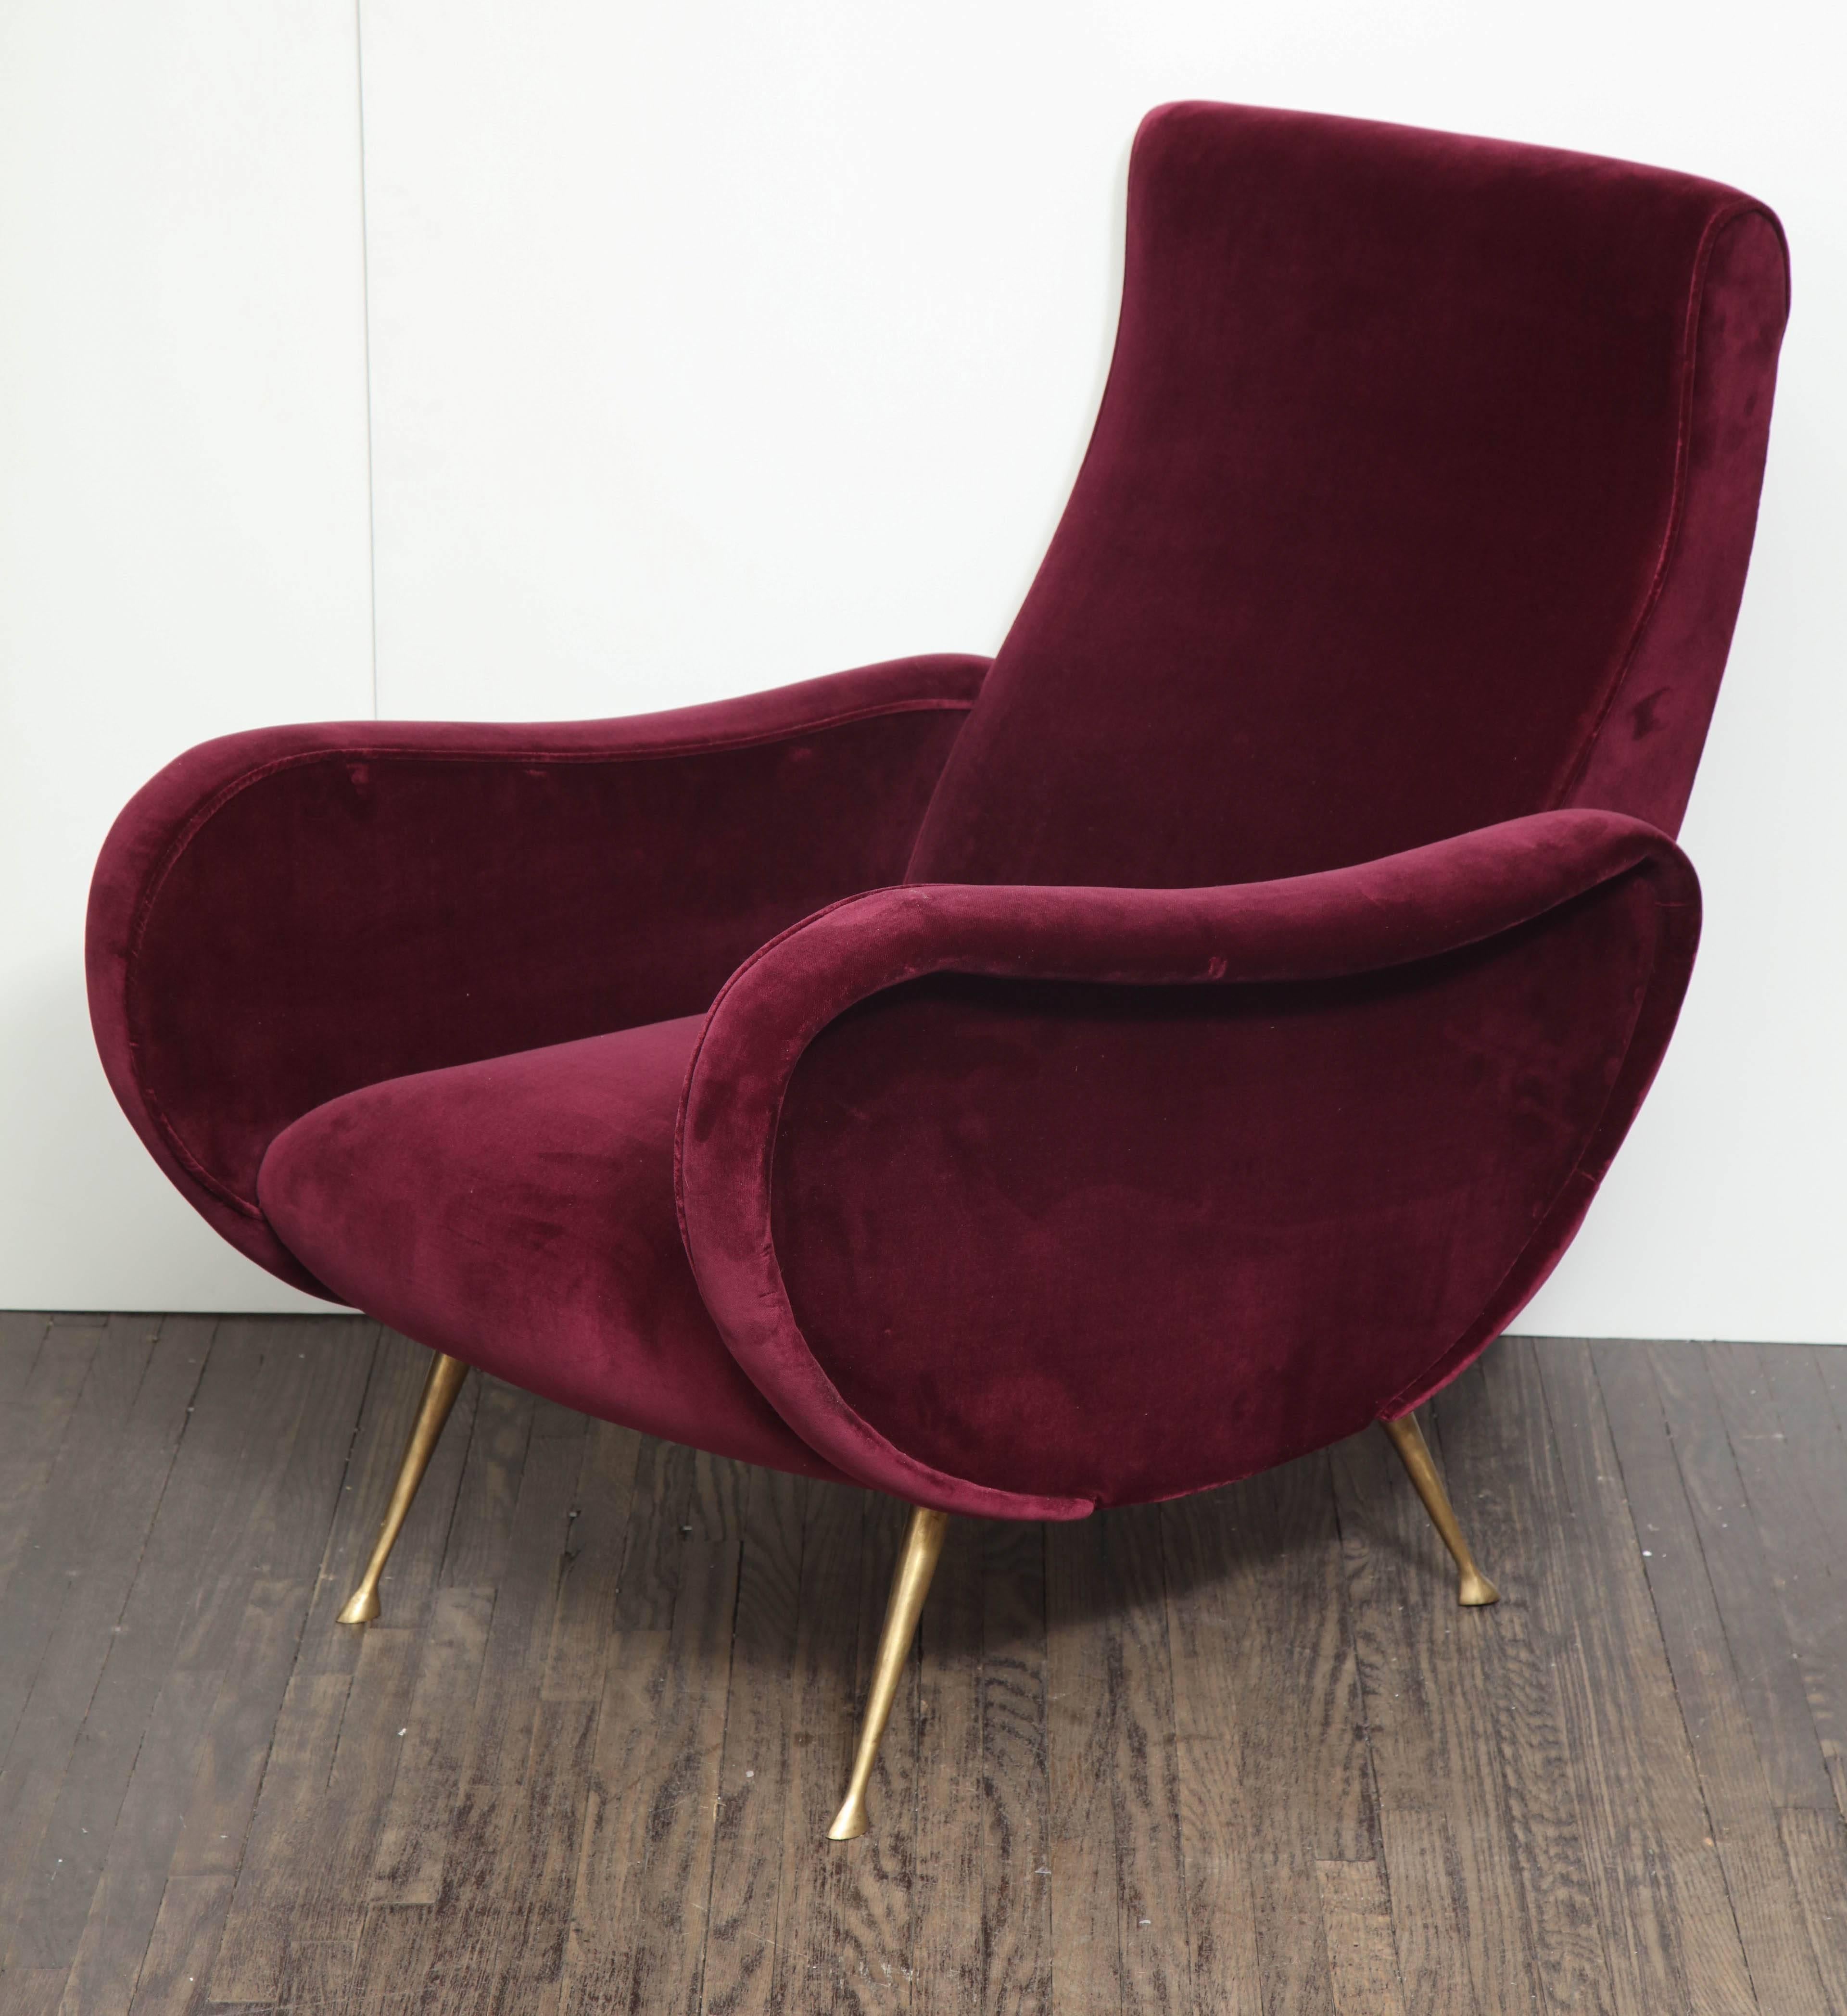 Pair of vintage Italian club chairs re-upholstered in burgundy velvet.